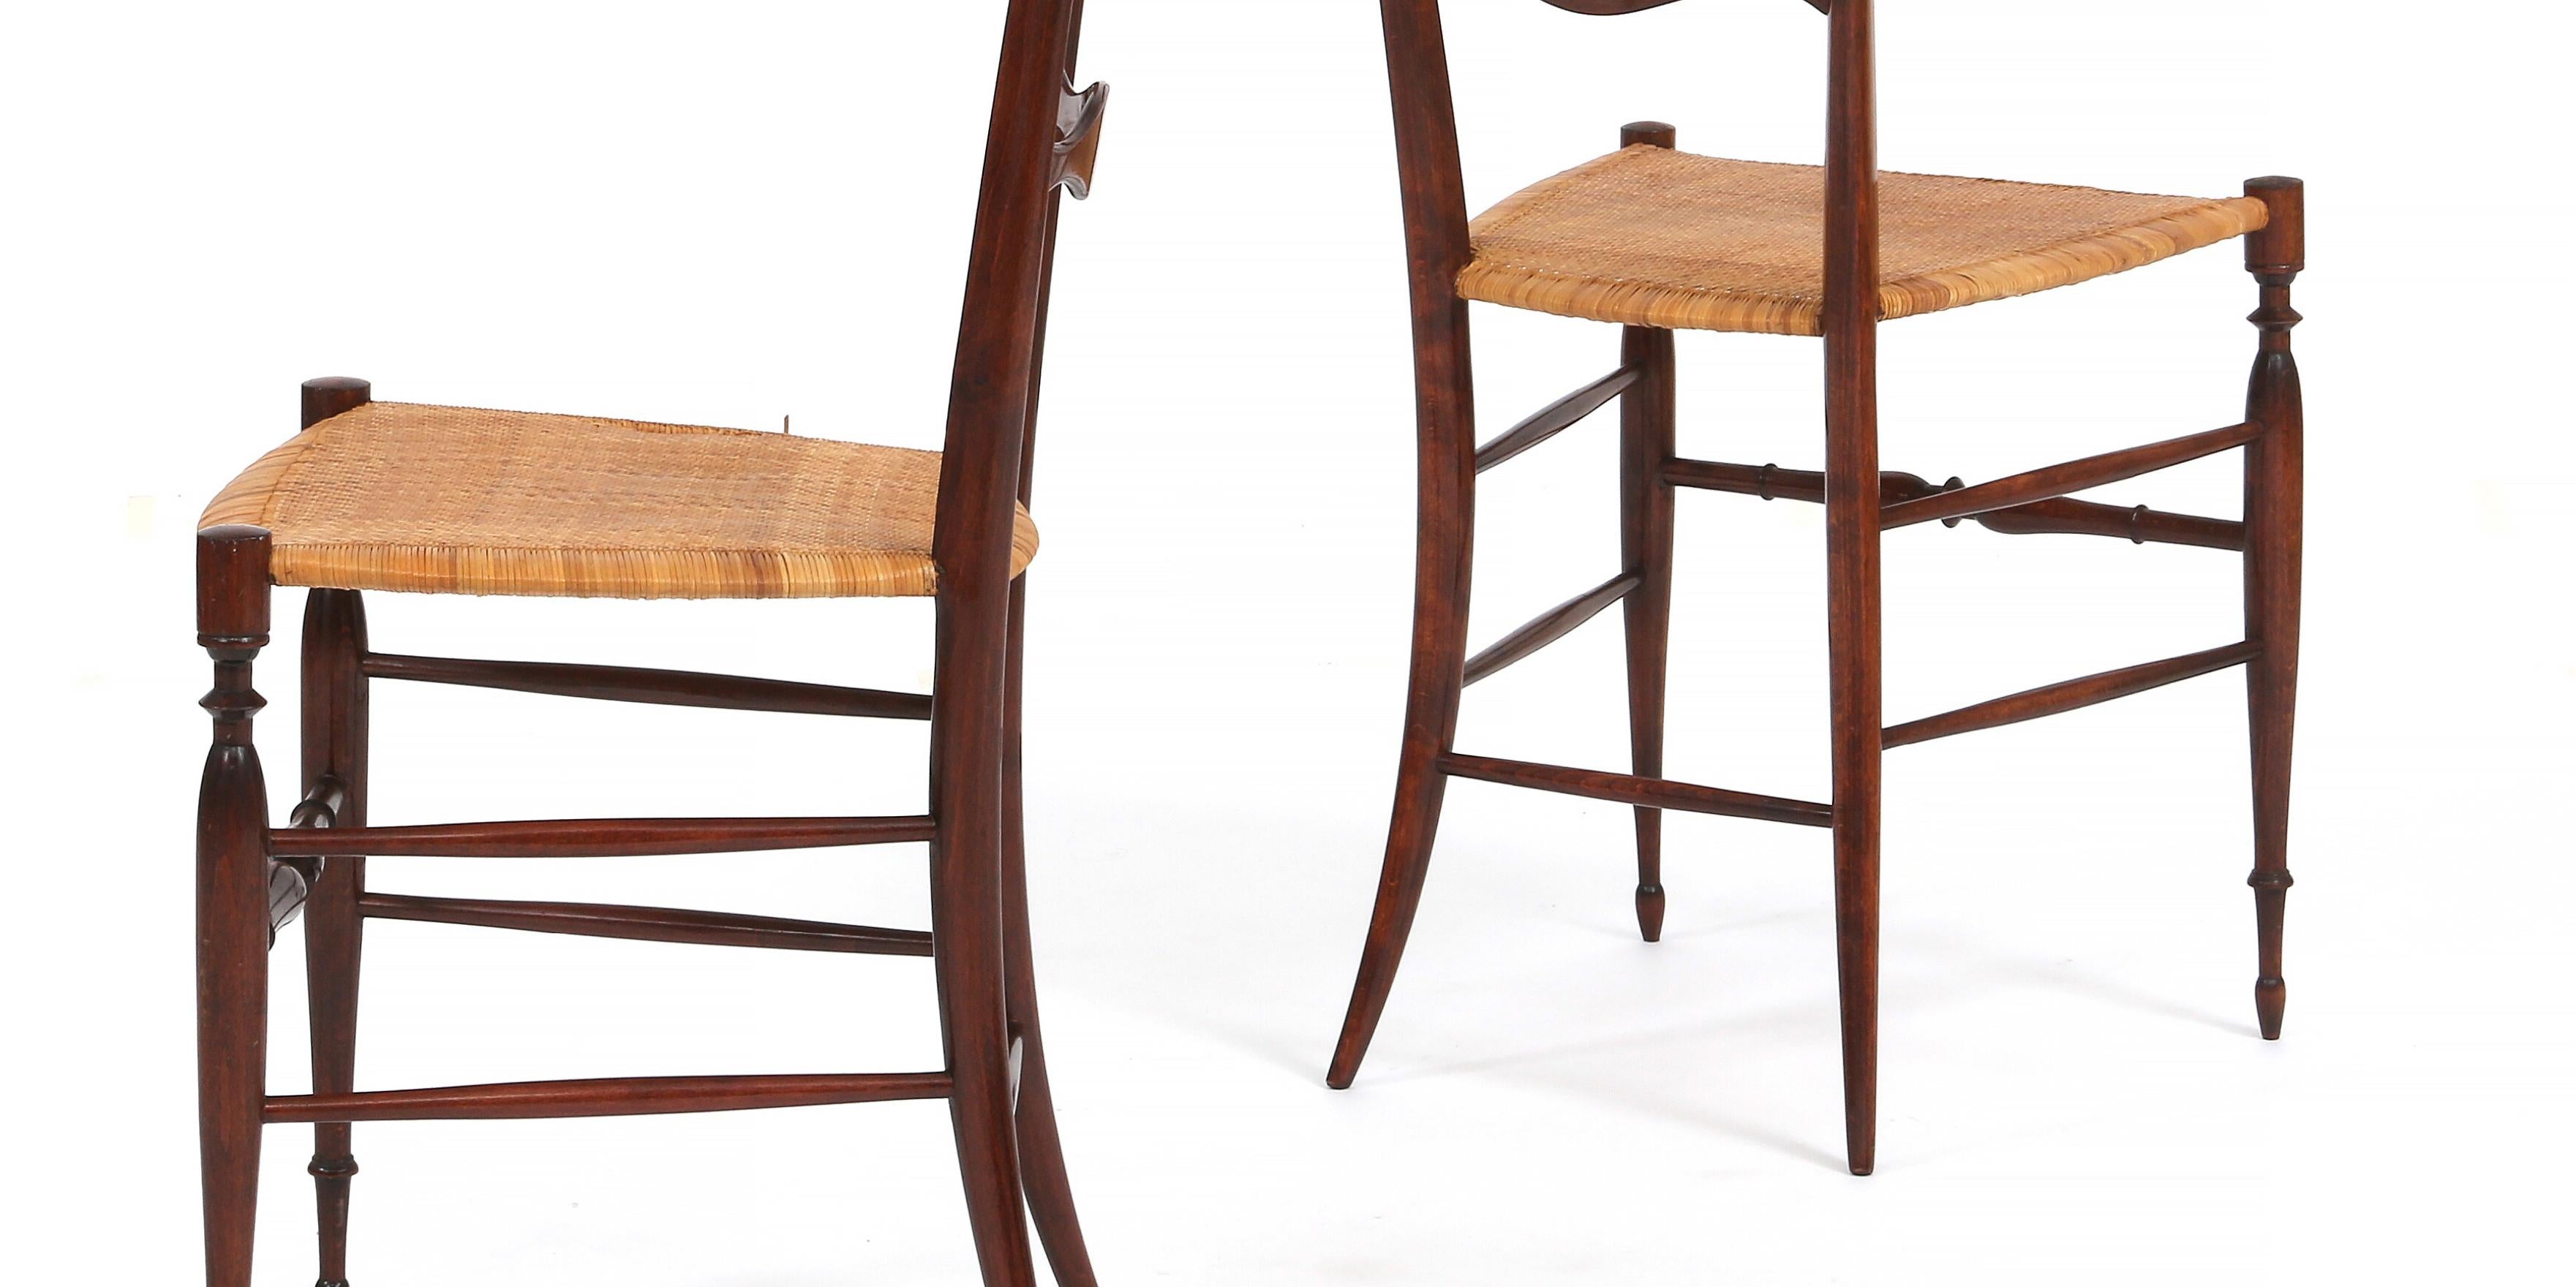 Italian Pair of Midcentury Chairs by Colombo Sanguineti for Chiavari, 1950s